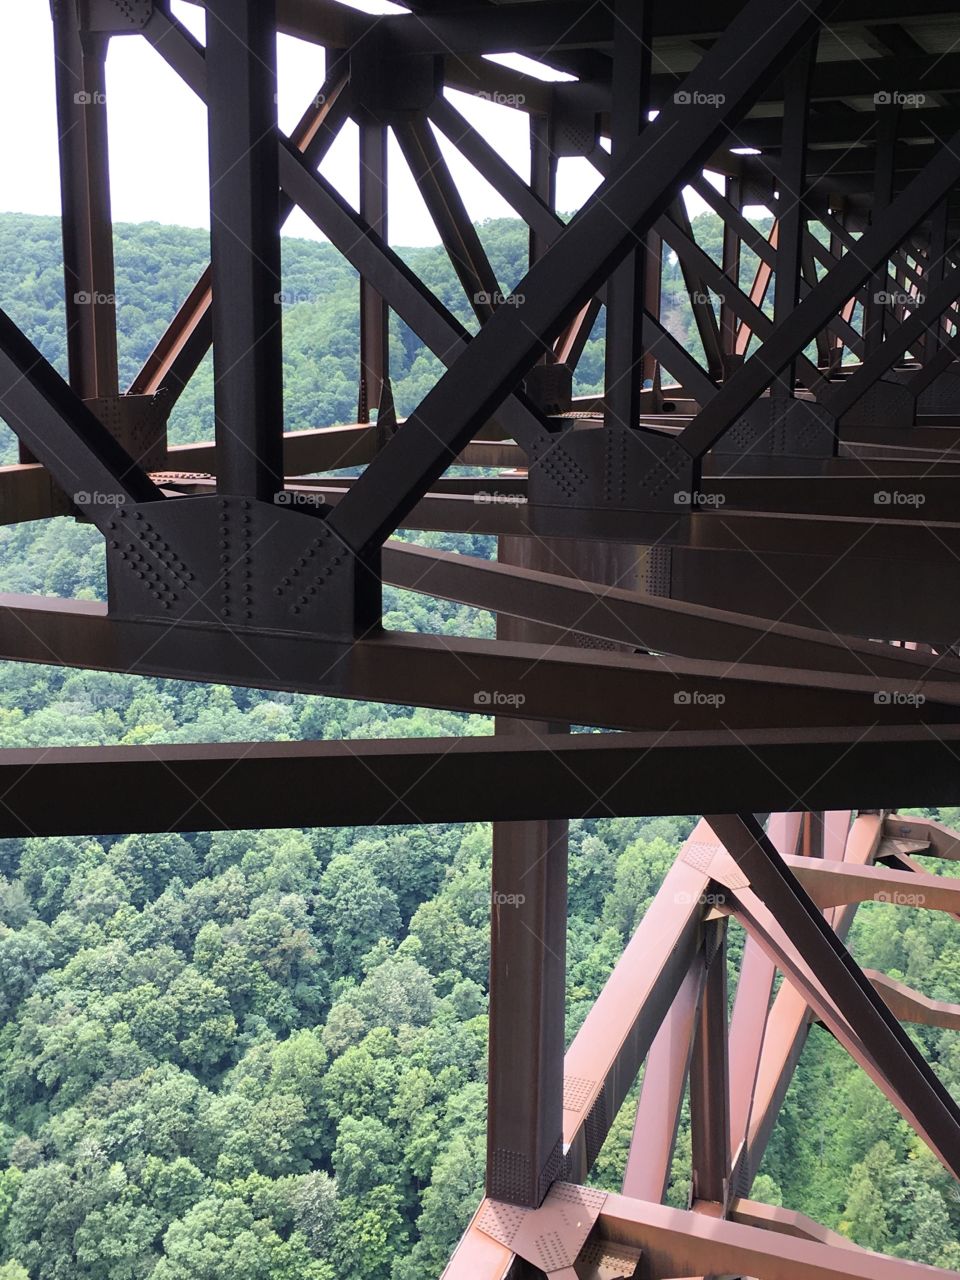 Views from New River Gorge Bridge catwalk - West Virginia 